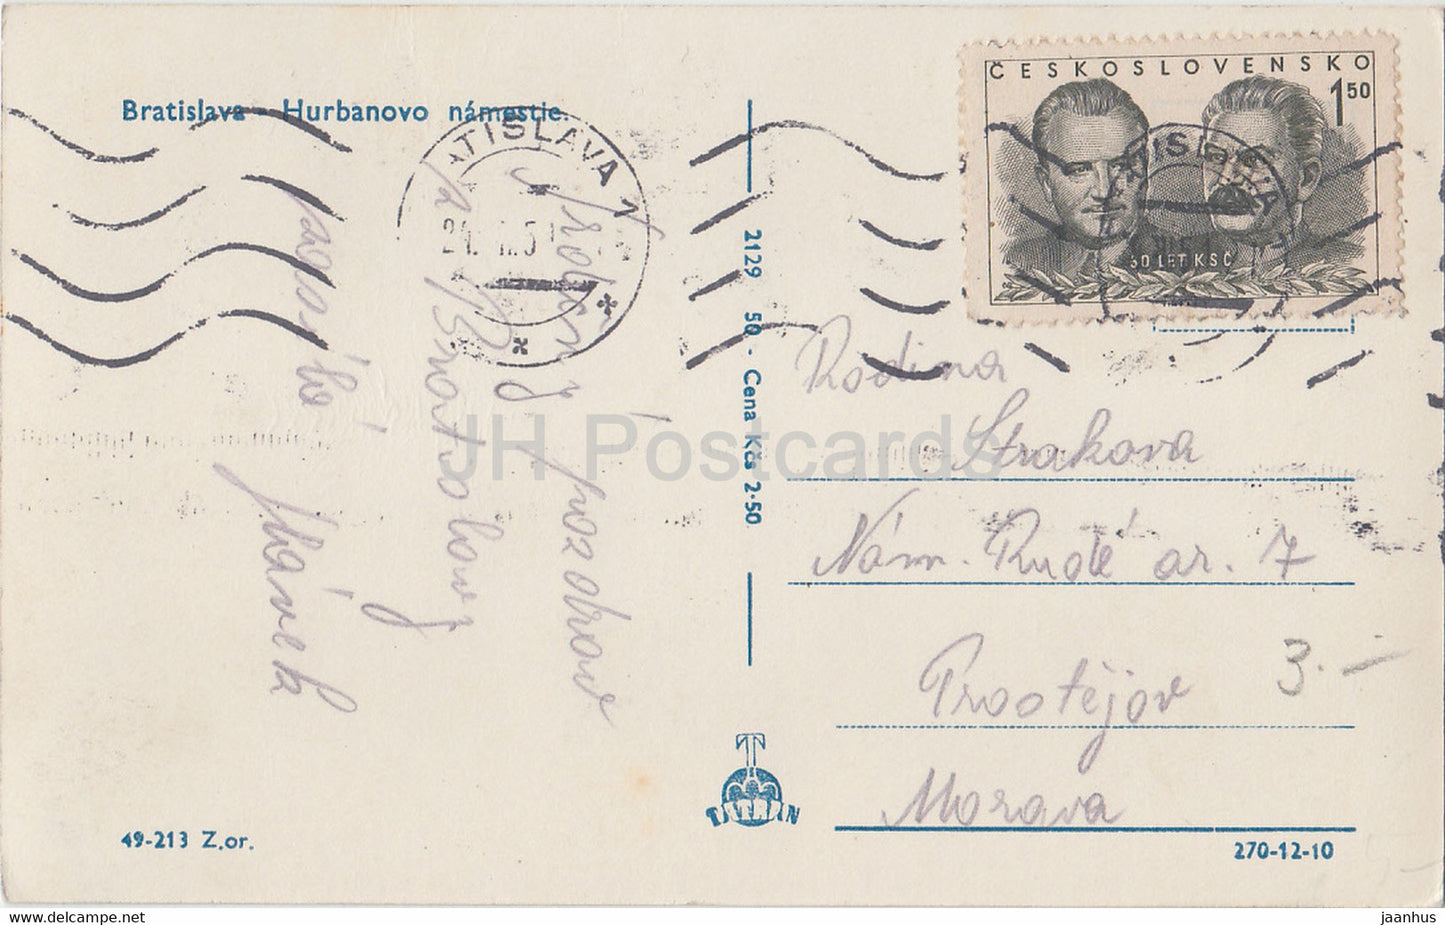 Bratislava - Hurbanovo namestie - tram - carte postale ancienne - Slovaquie - Tchécoslovaquie - occasion